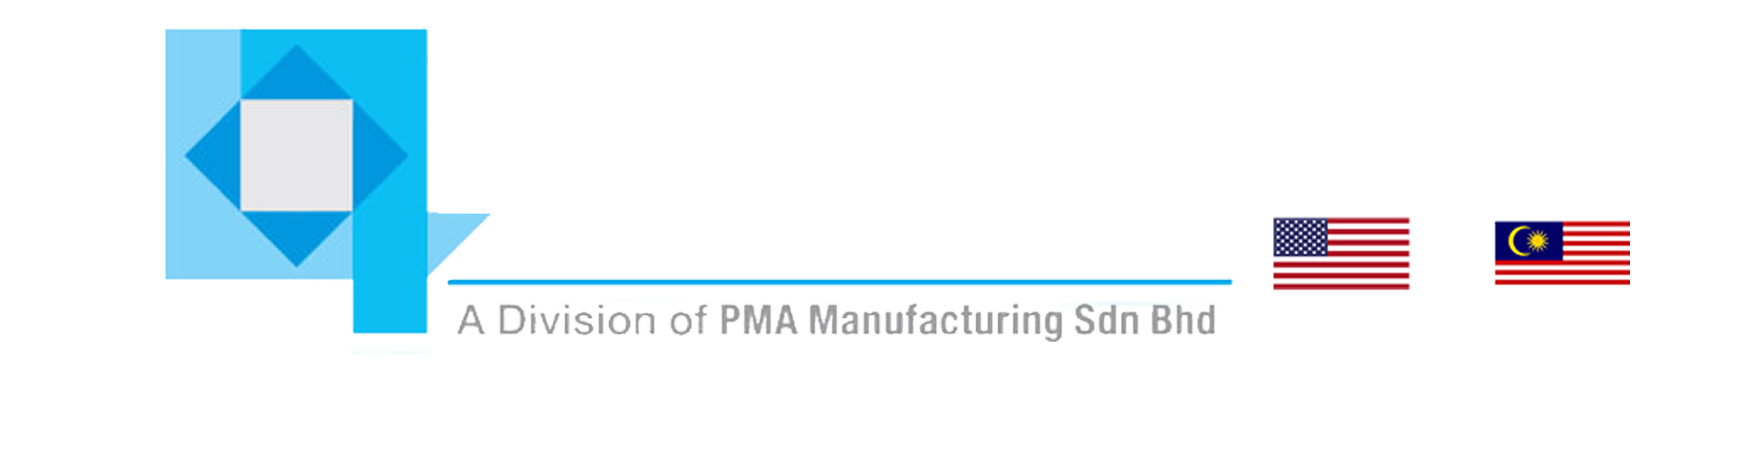 QuantumTec LSS